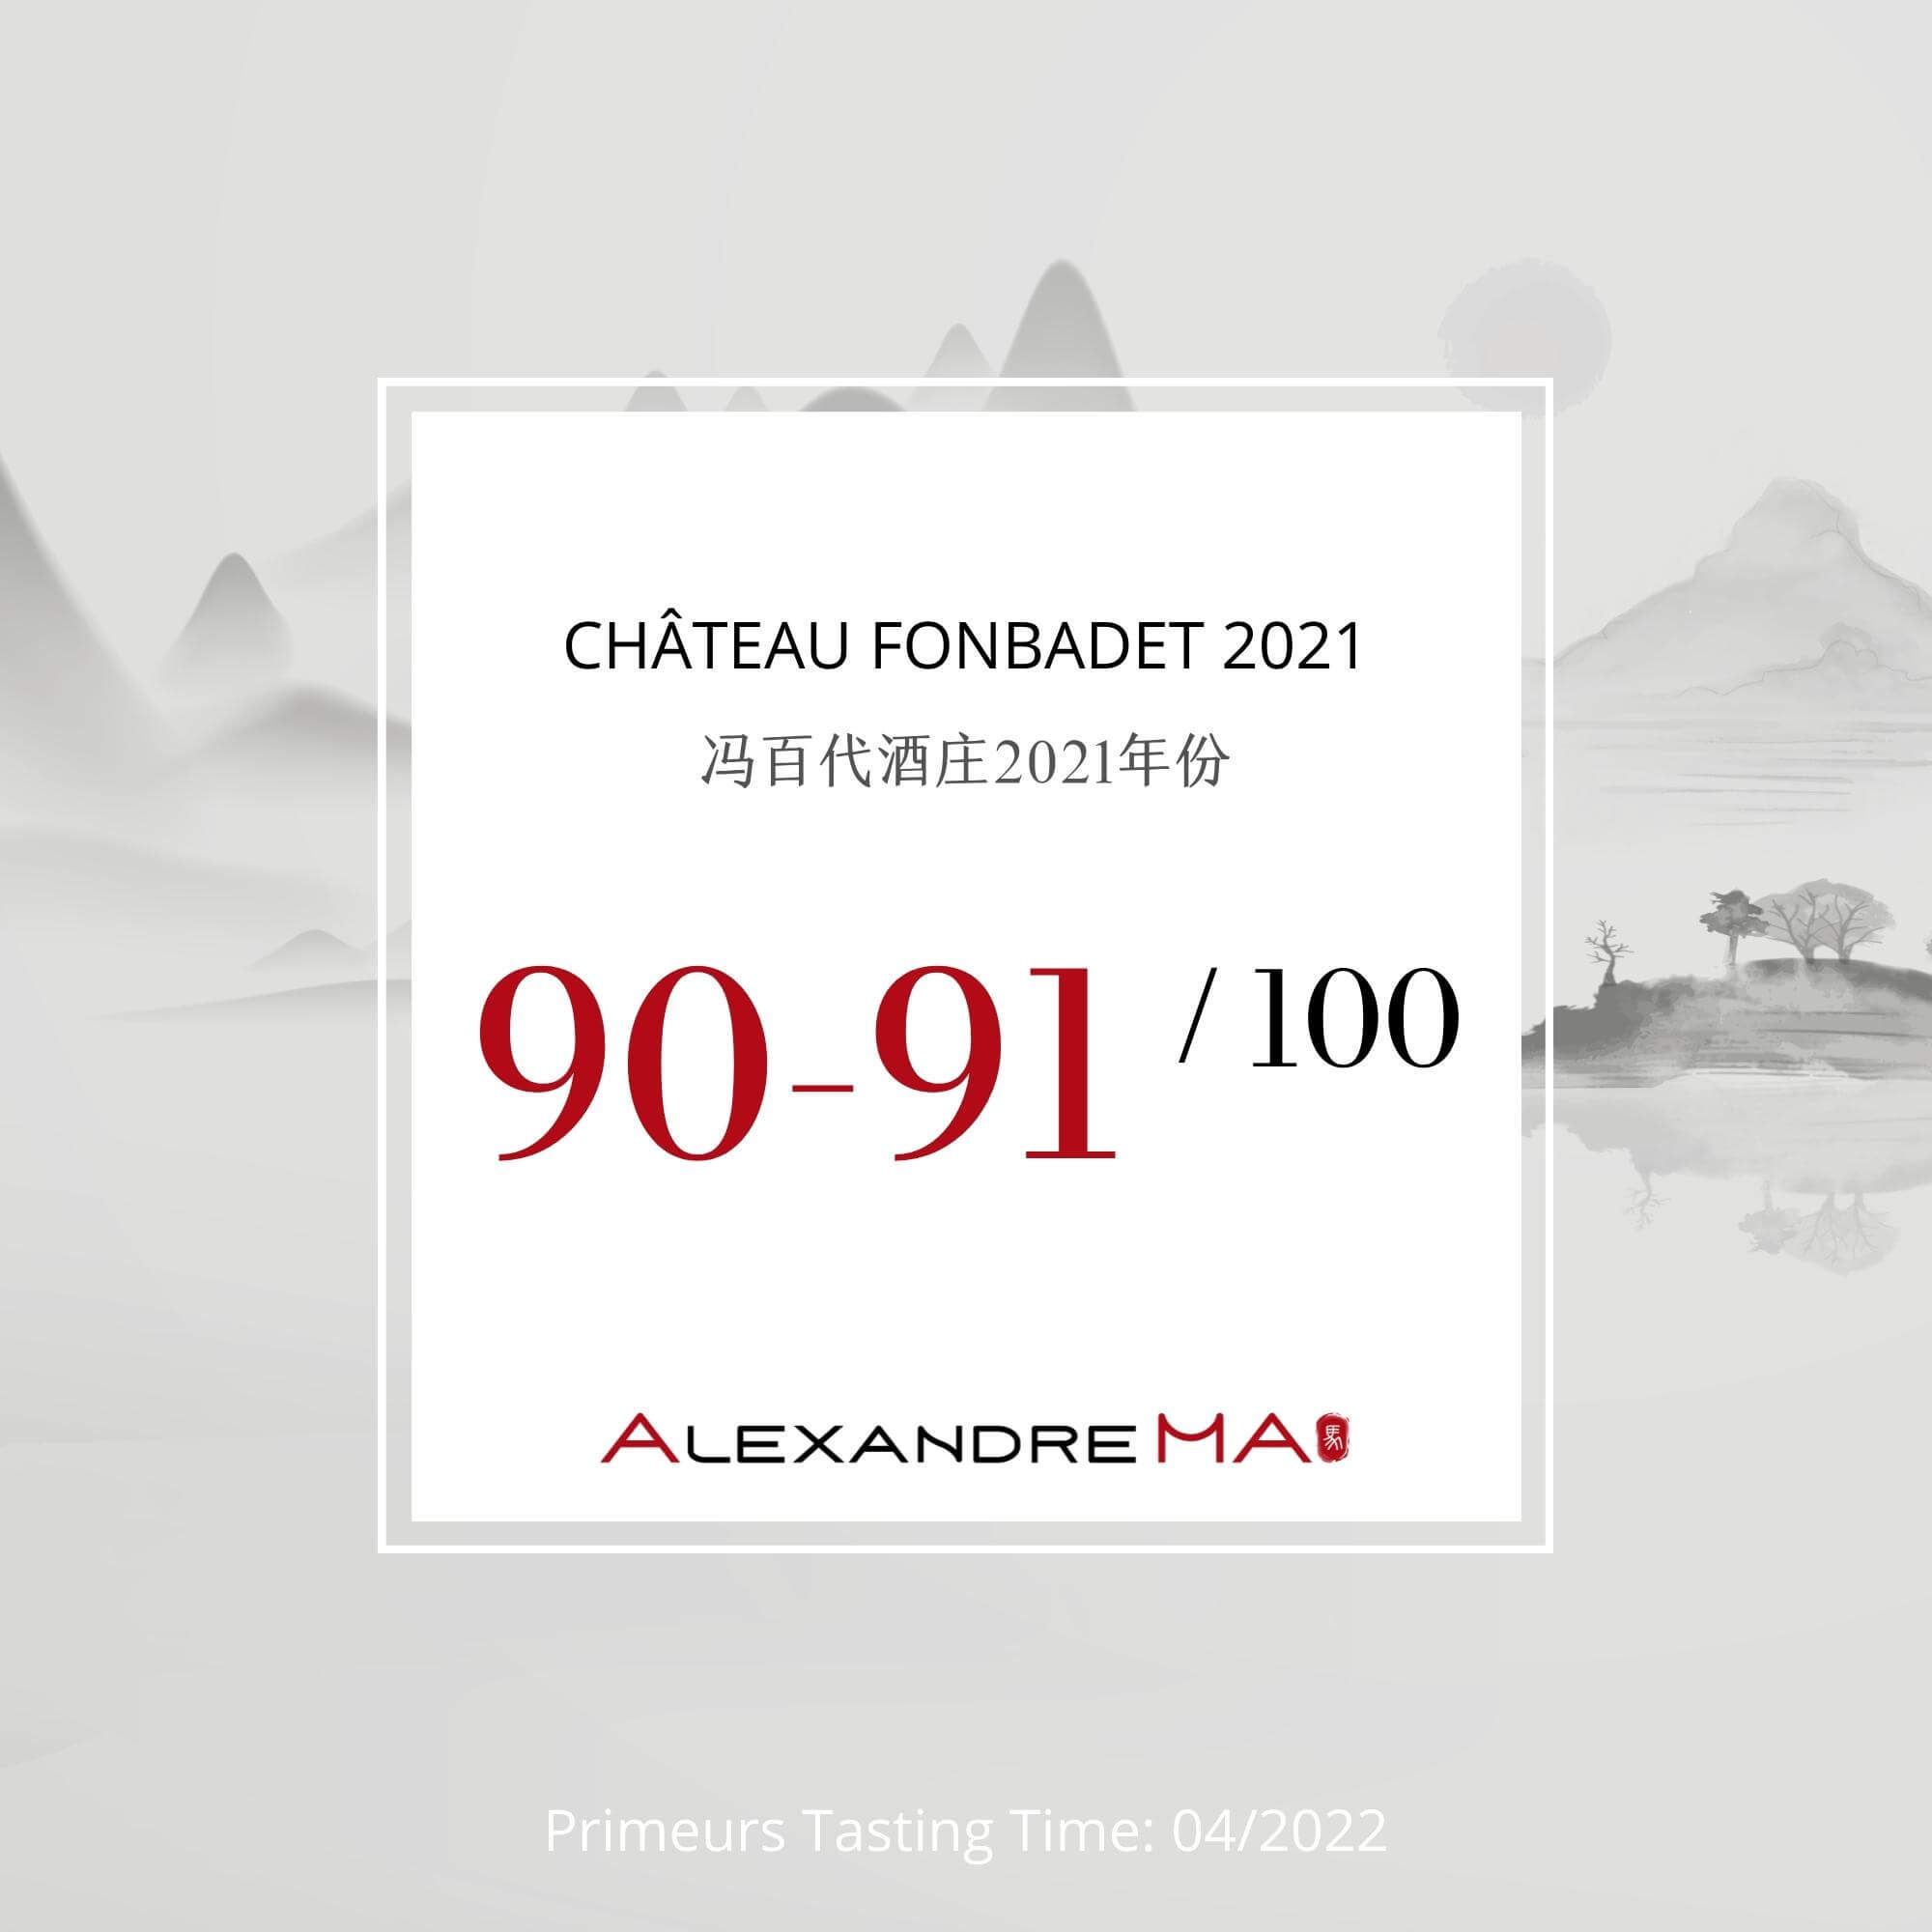 Château Fonbadet 2021 - Alexandre MA